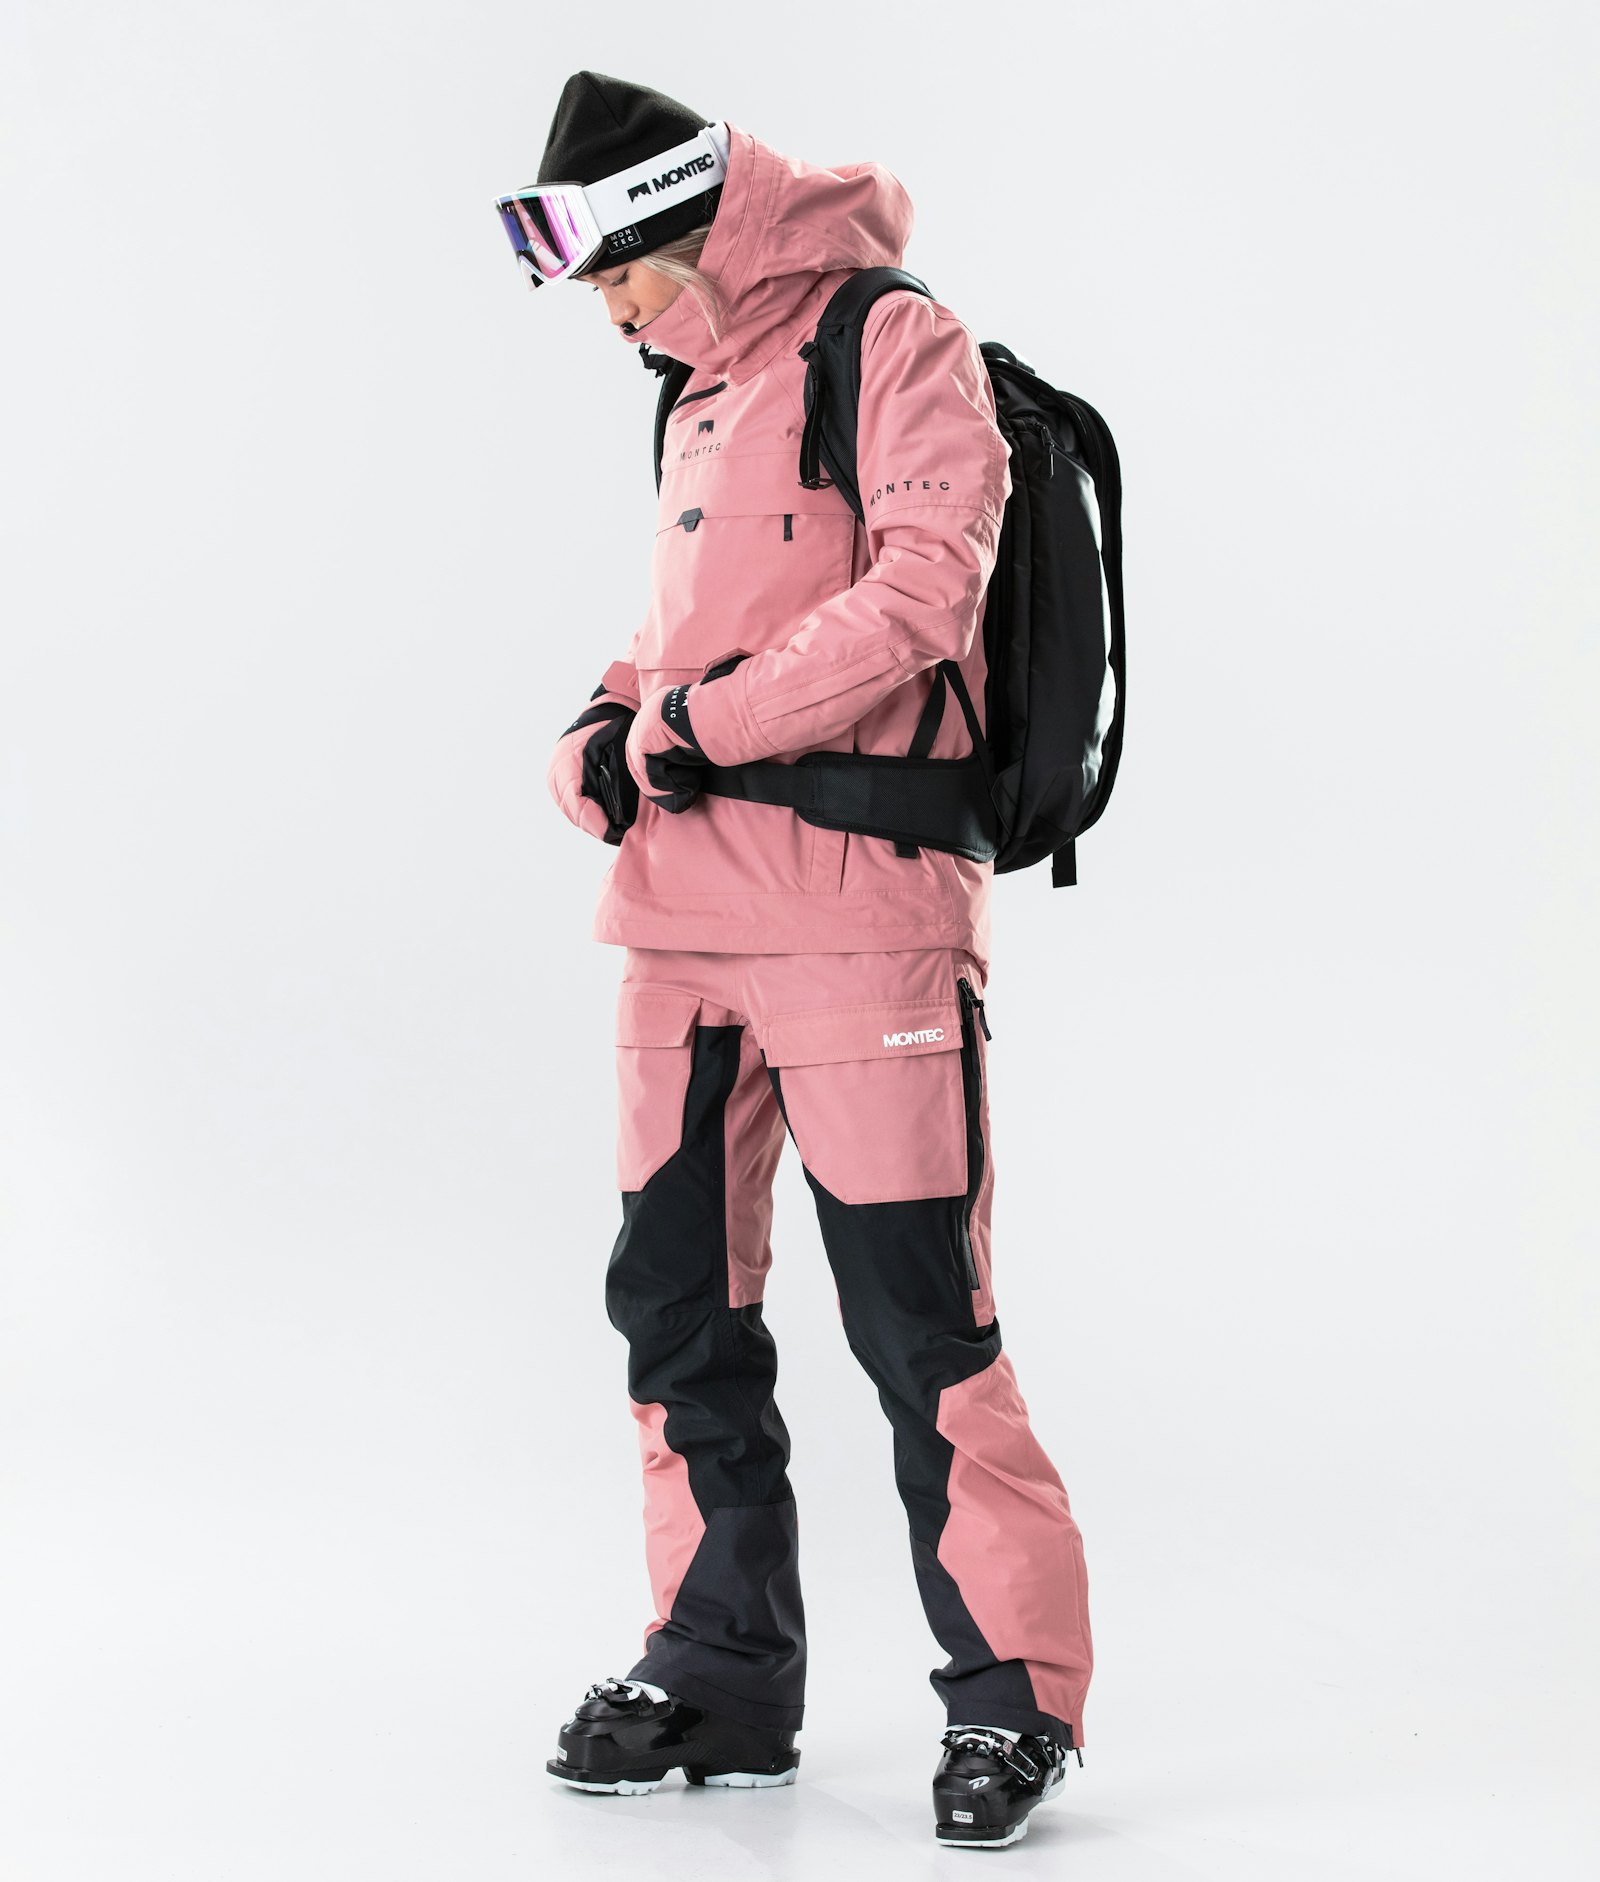 Dune W 2020 Skijacke Damen Pink